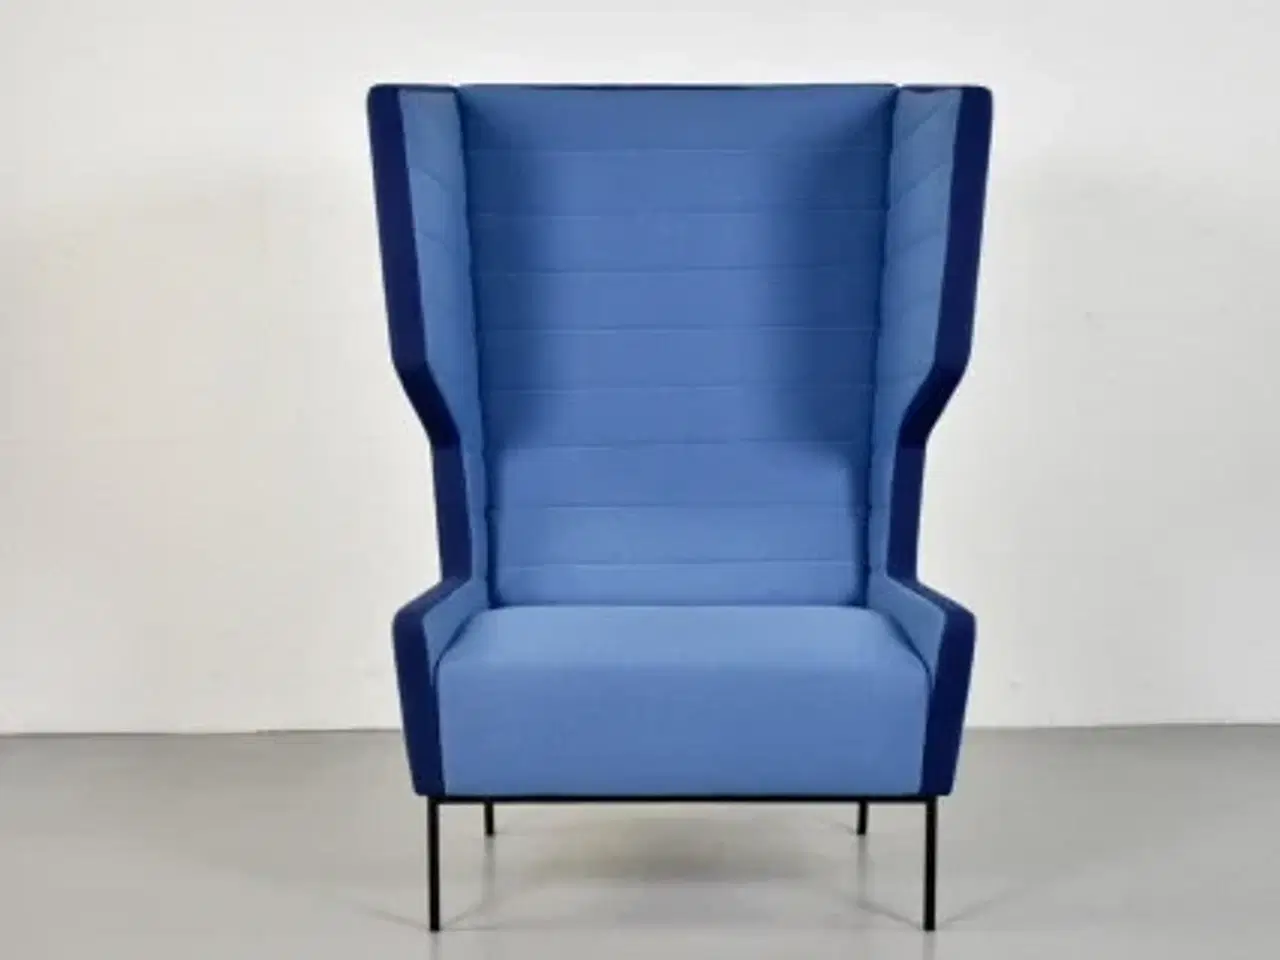 Billede 1 - Borg loungestol med høj ryg, i blå farver